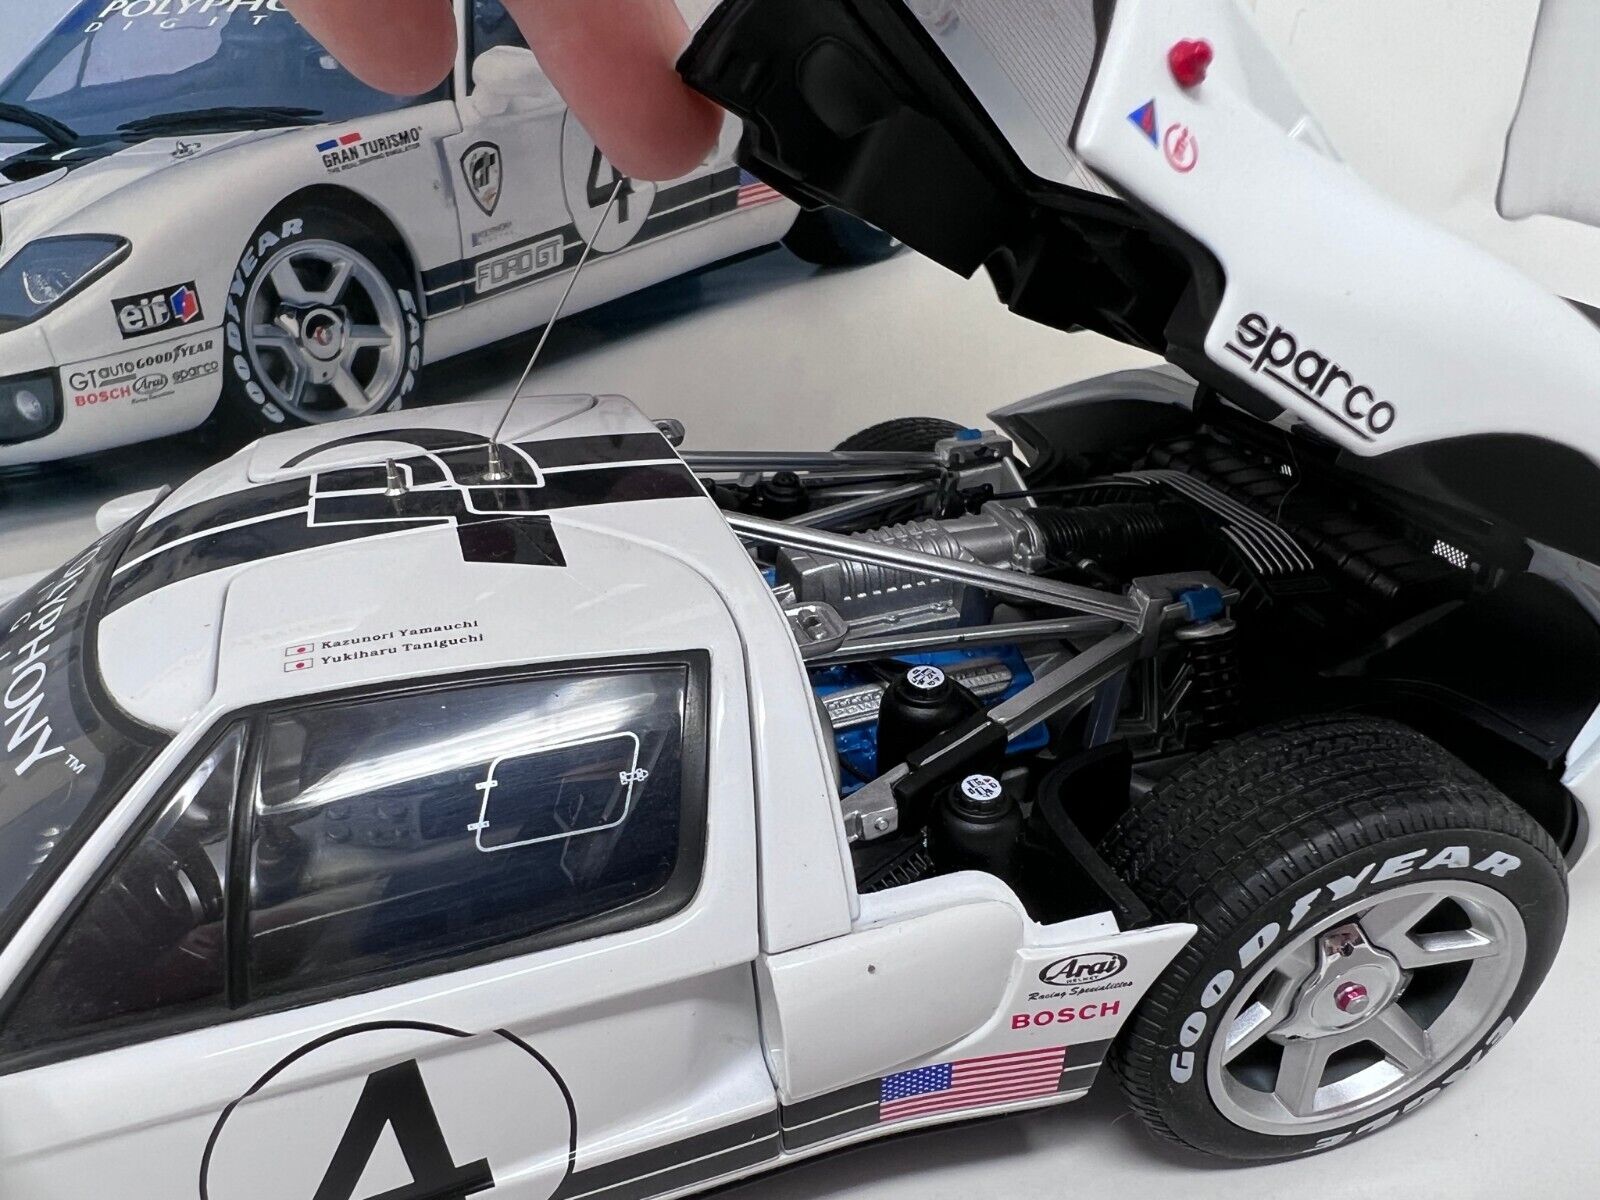 Autoart 1/18 Scale Diecast 80515 - Ford GT LM Race Car Spec II #4 Gran  Turismo